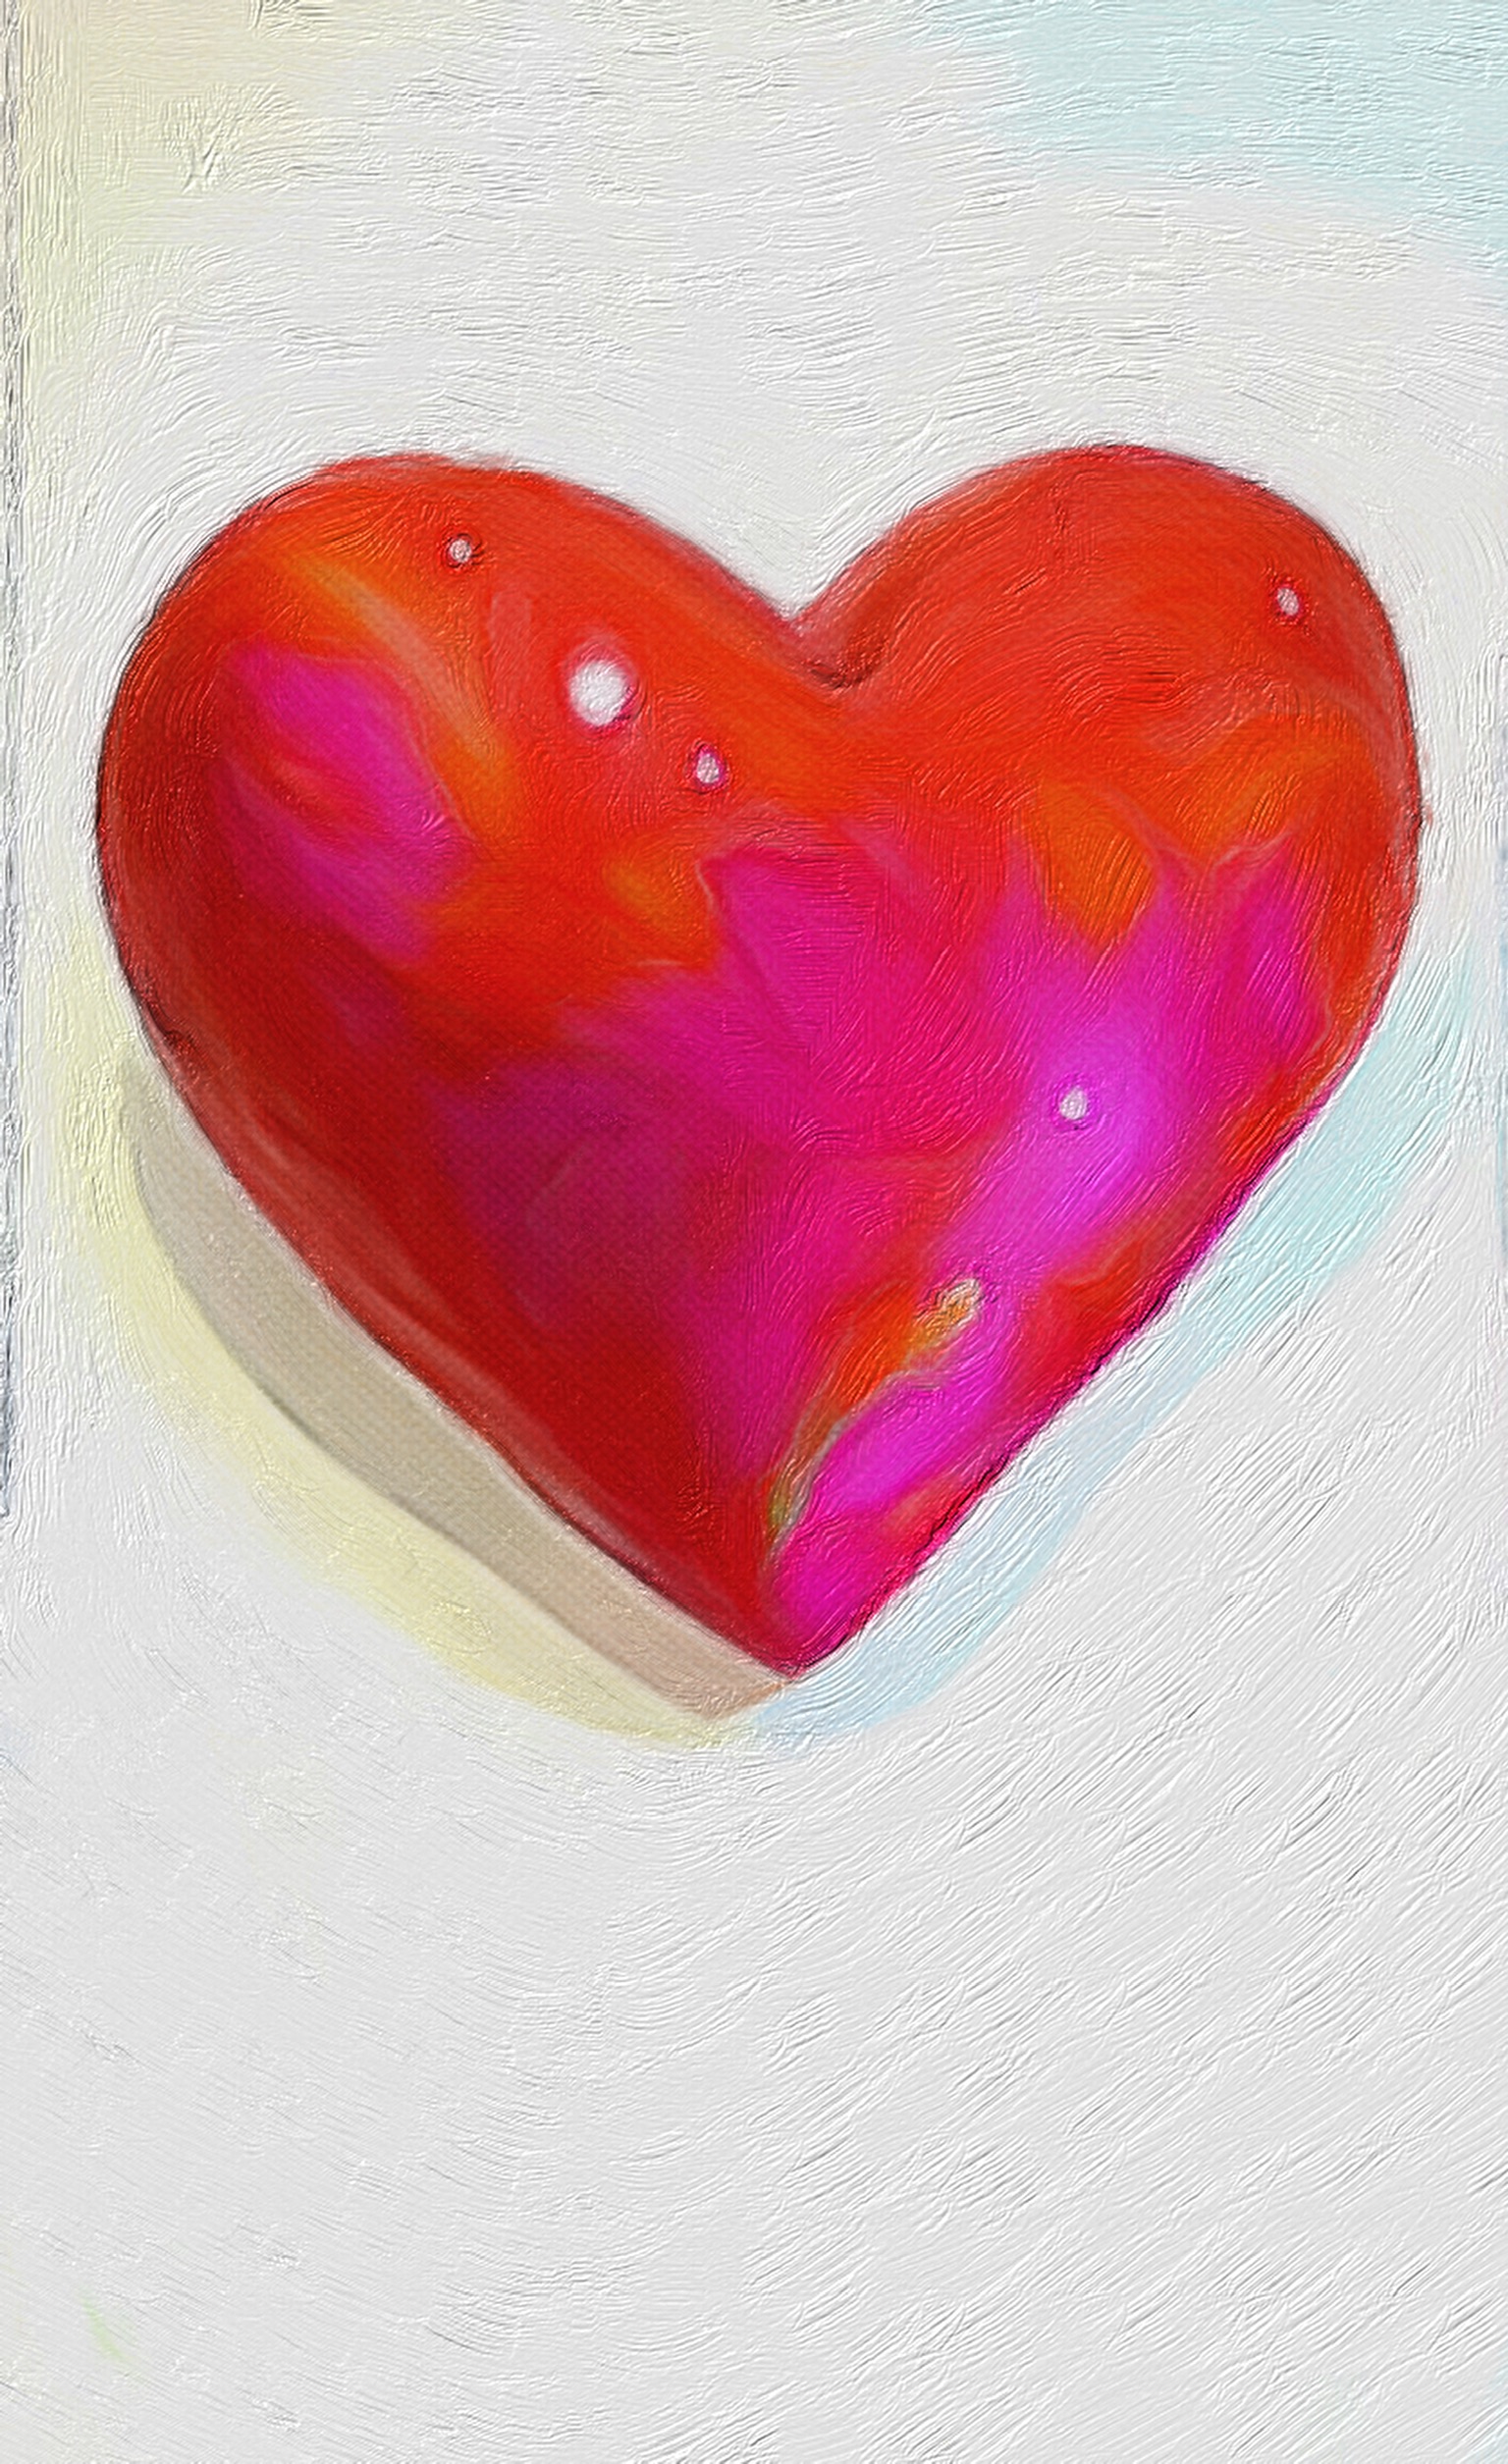 Heart Painting Ideas